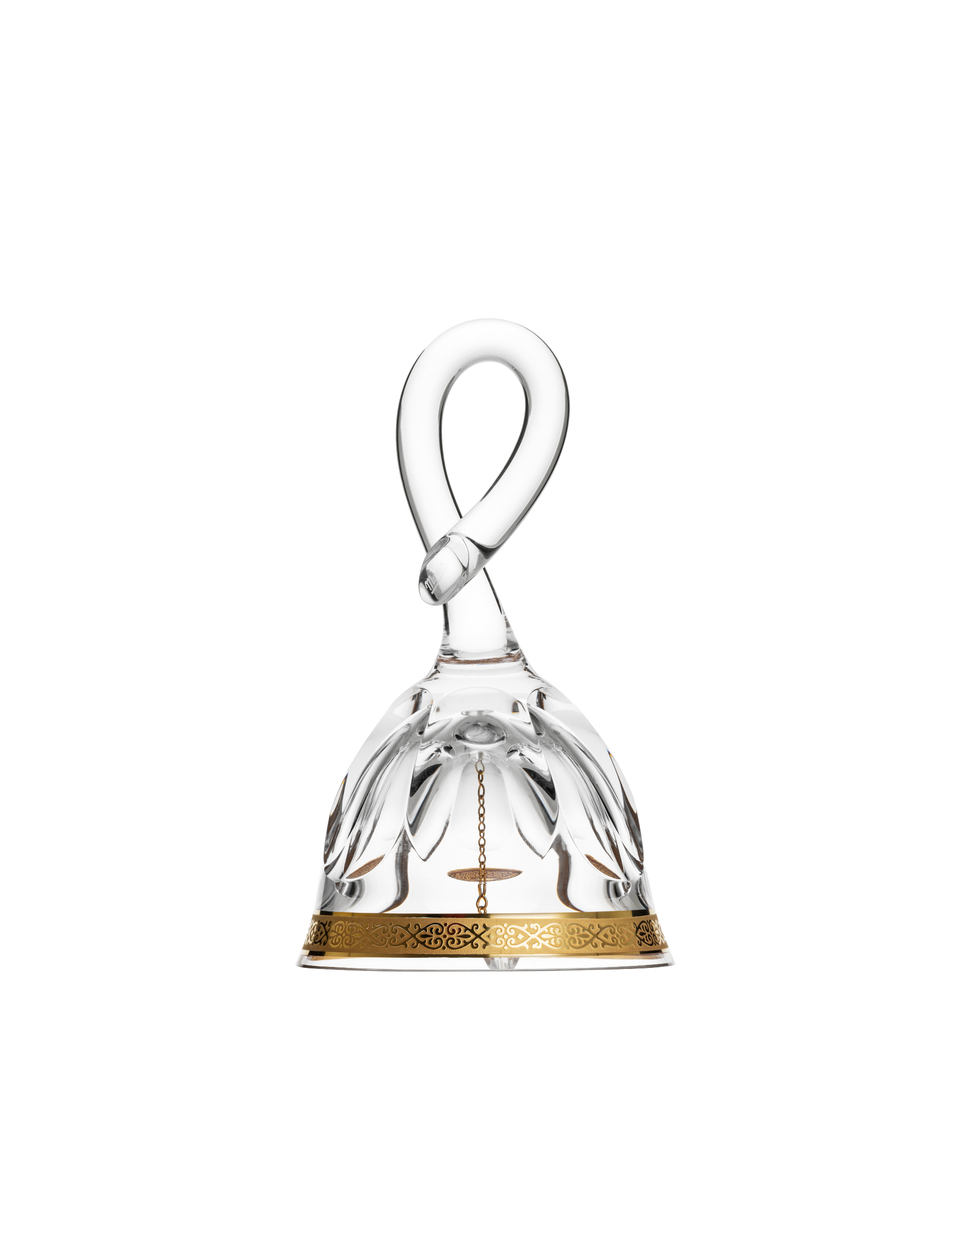 Lady Hamilton bell, 13.5 cm